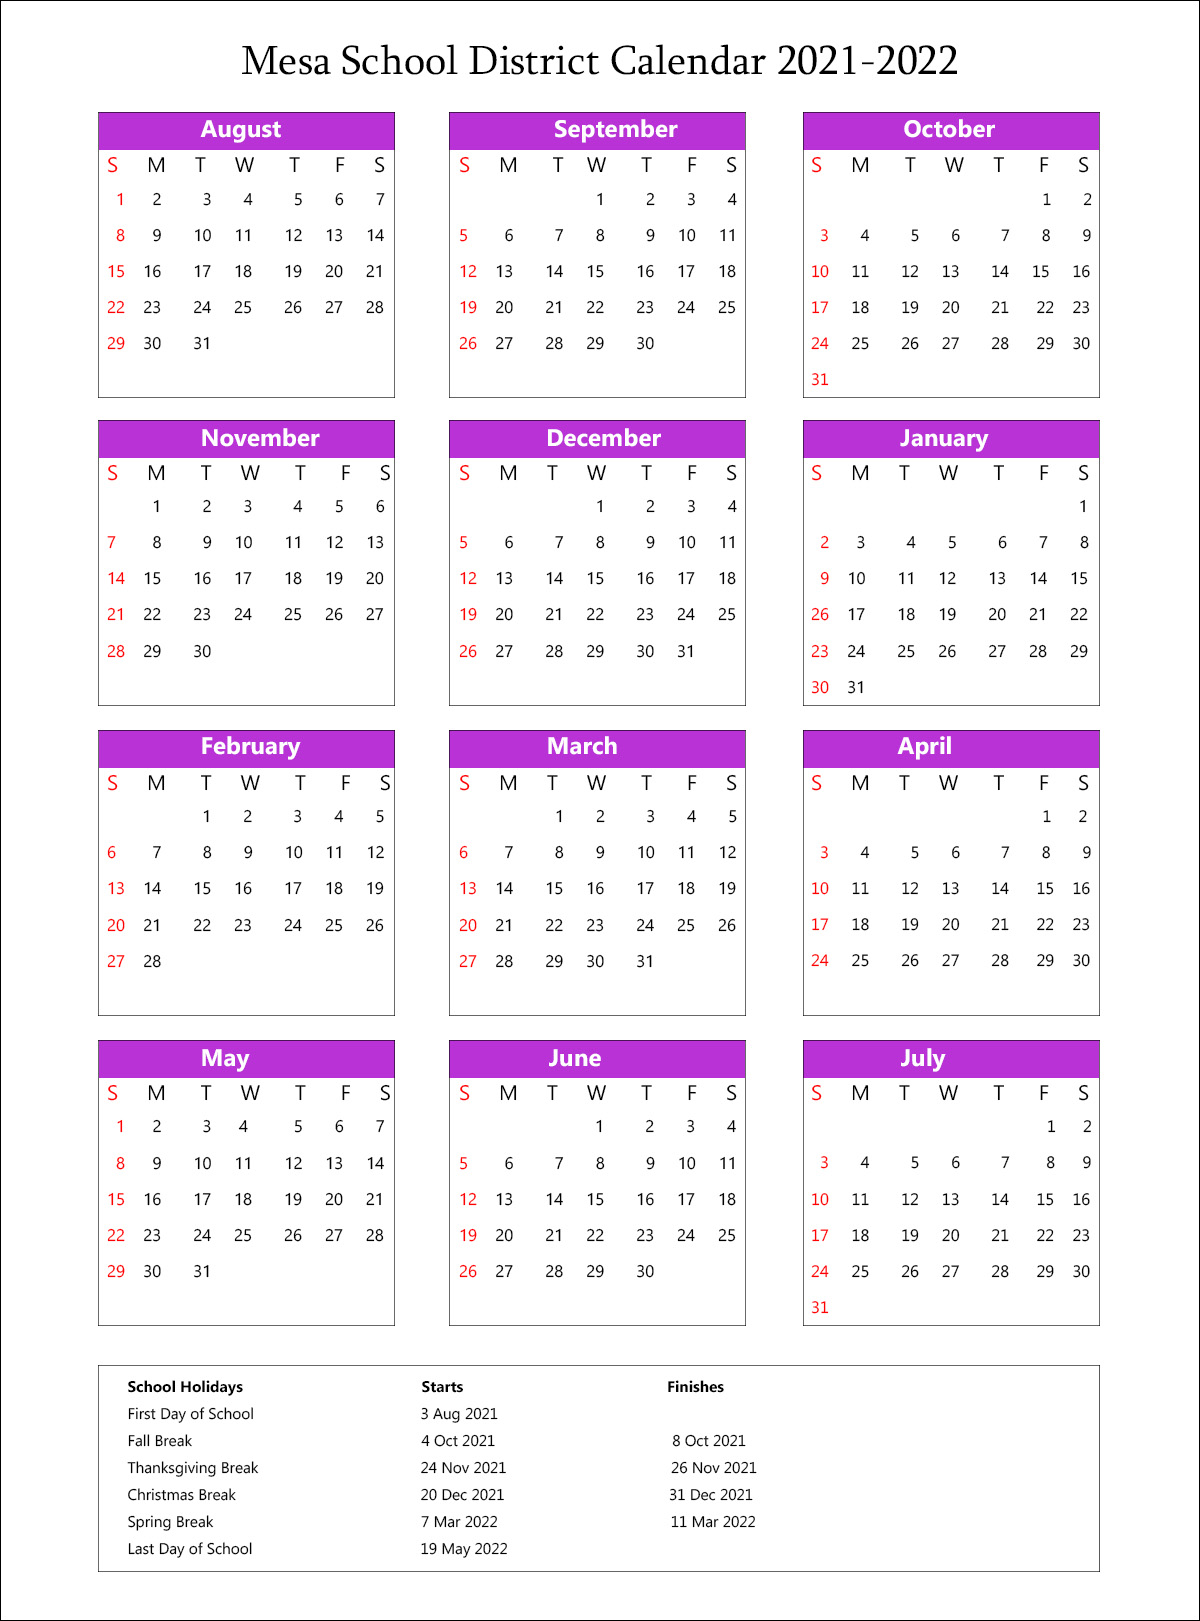 Mesa Unified School District Calendar Holidays 2021-2022